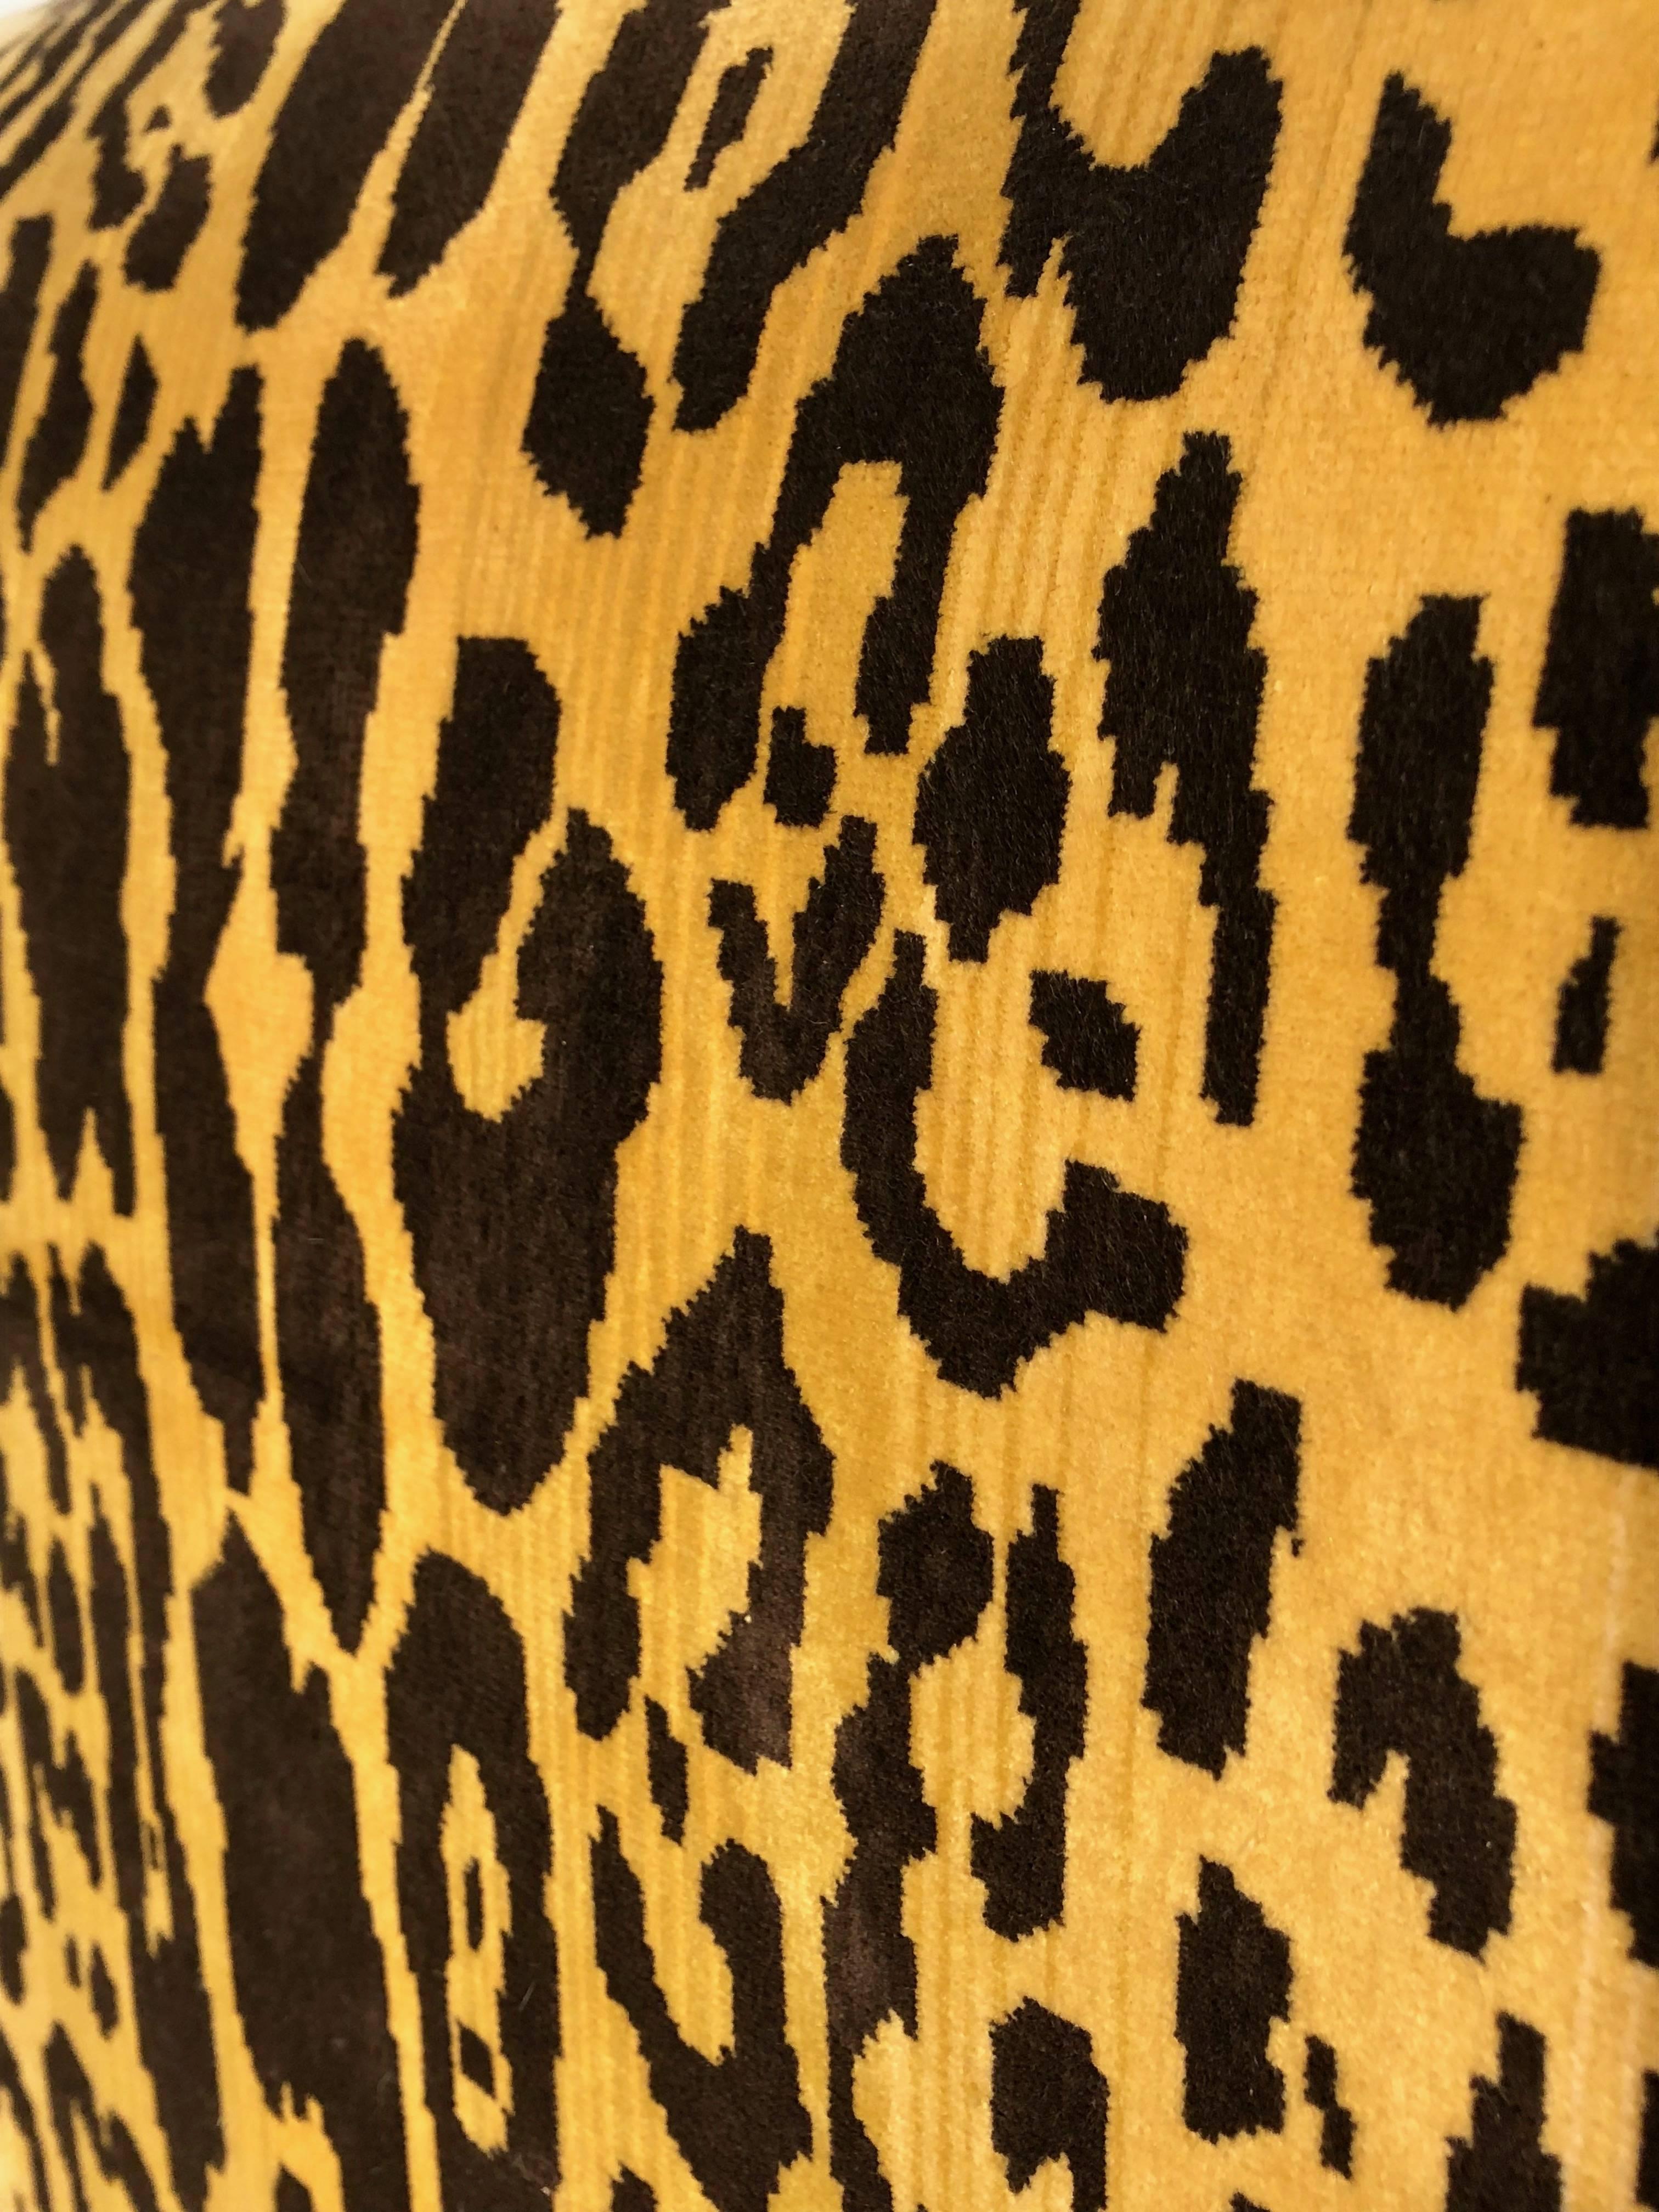 A wonderfully upholstered queen size headboard -
high end leopard velvet fabric.